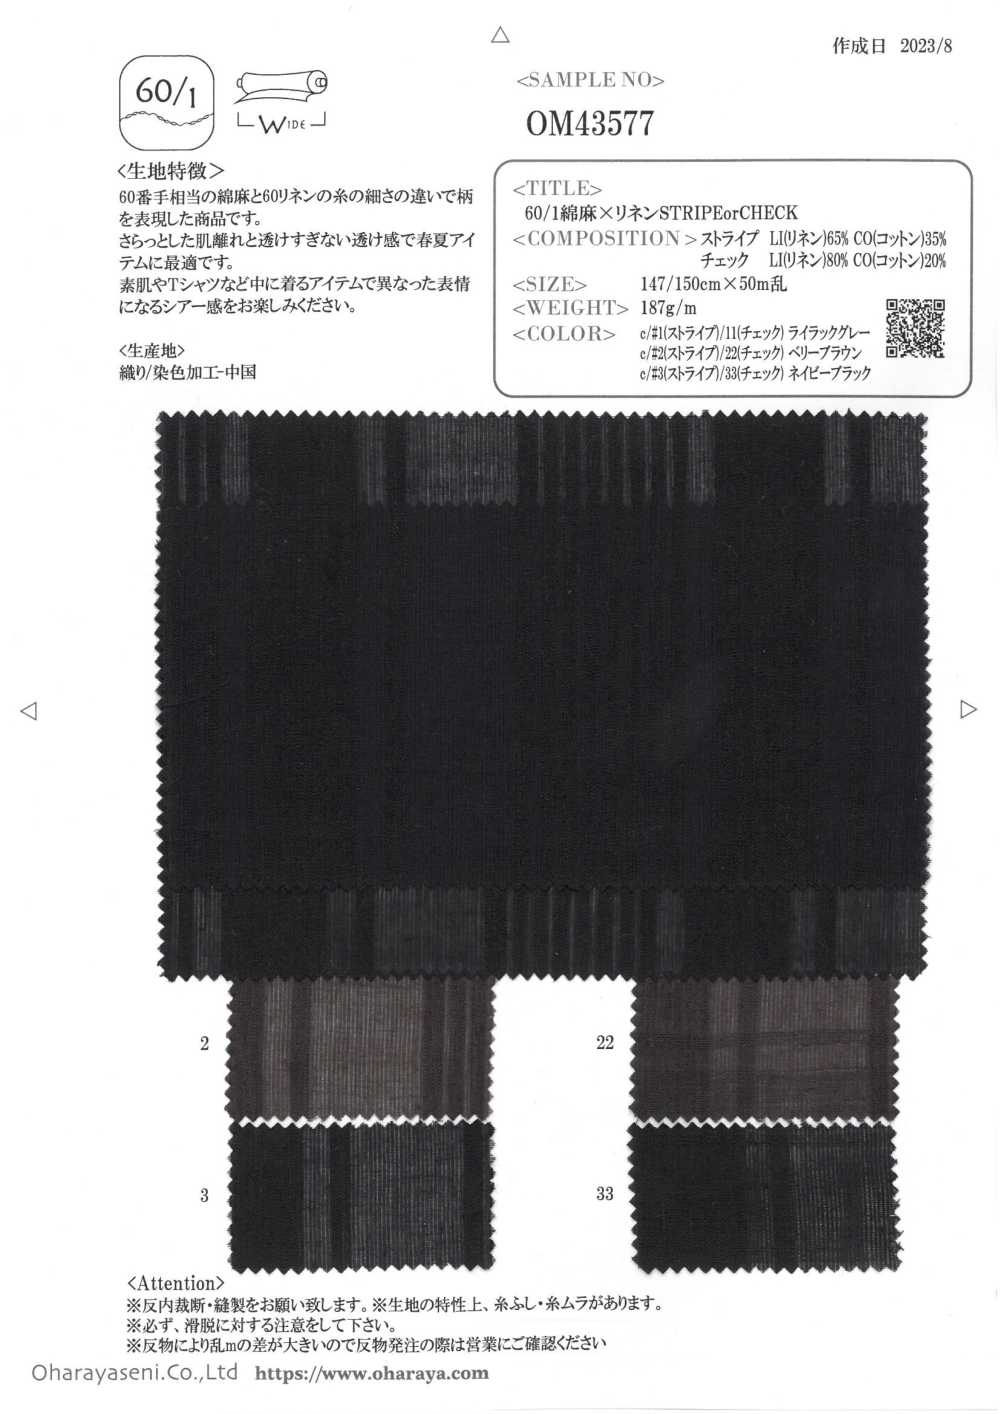 OM43577 60/1 Linen X Linen STRIPE Or CHECK[Textile / Fabric] Oharayaseni